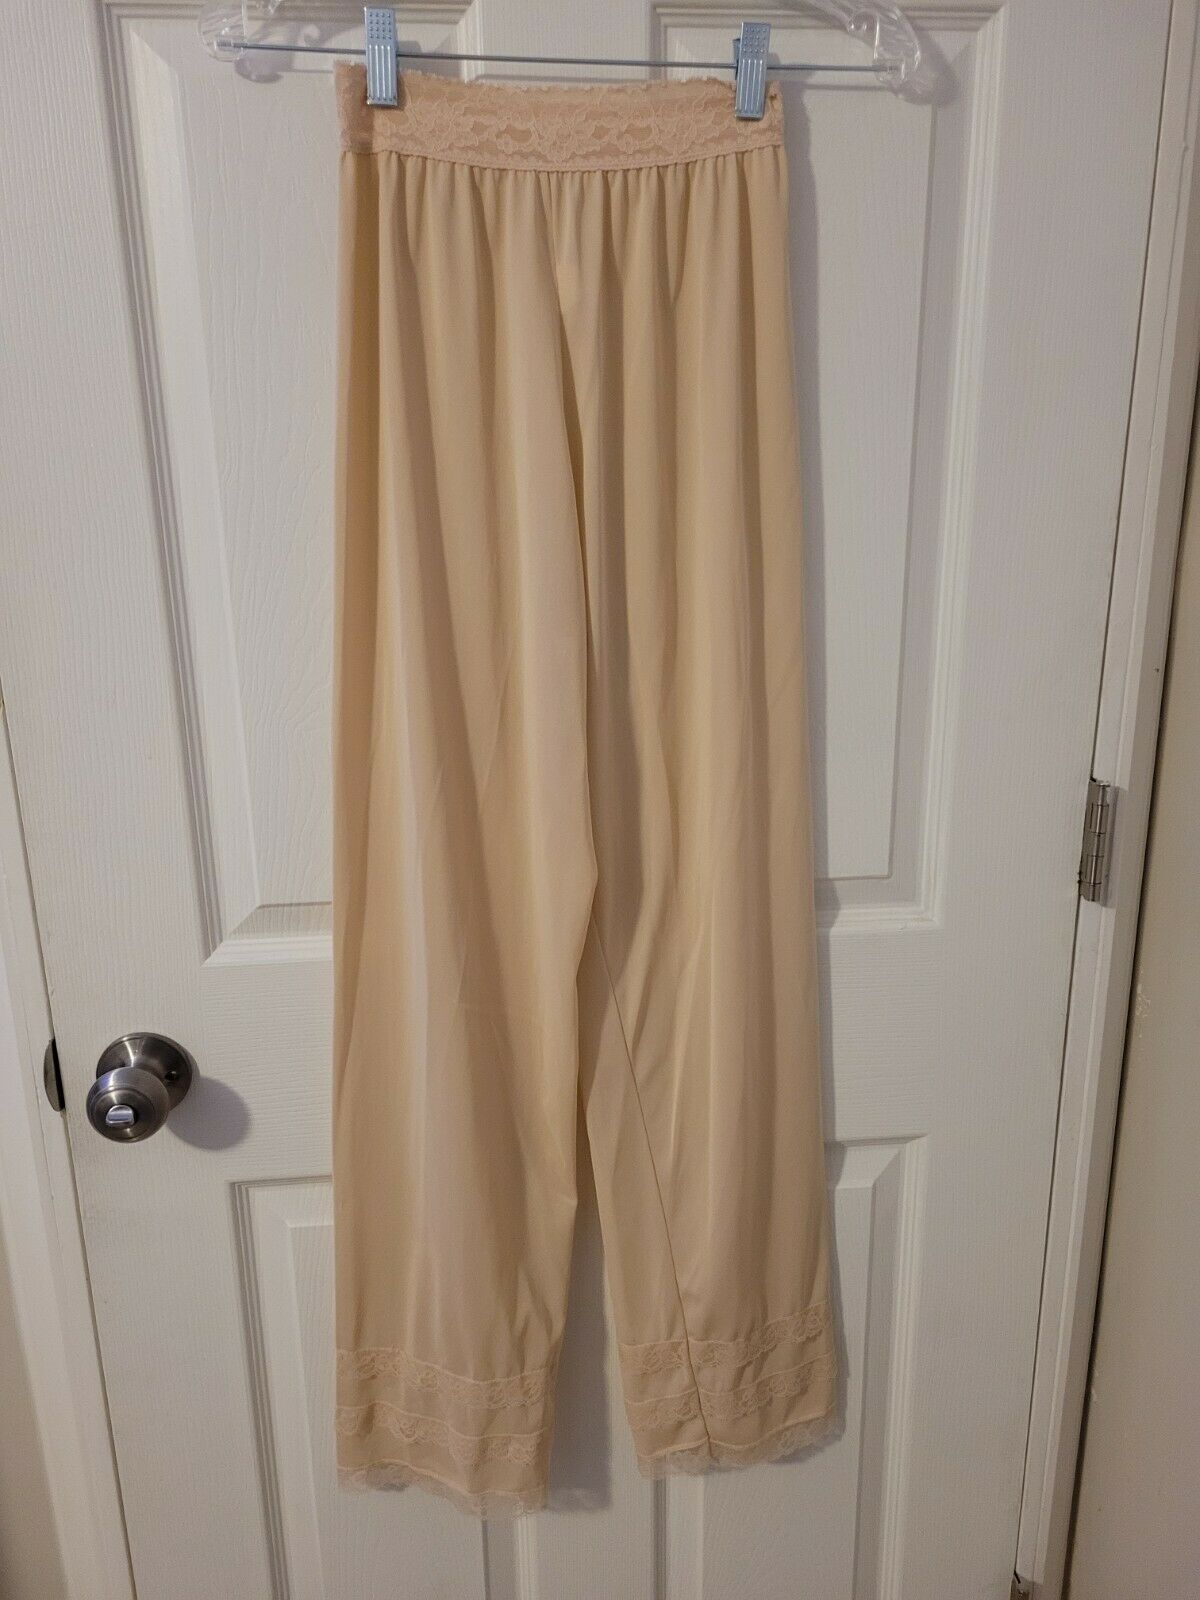 Vintage Periwinkle Silky Nylon Pajama Bottoms Lounge Pants Lingerie Size Small